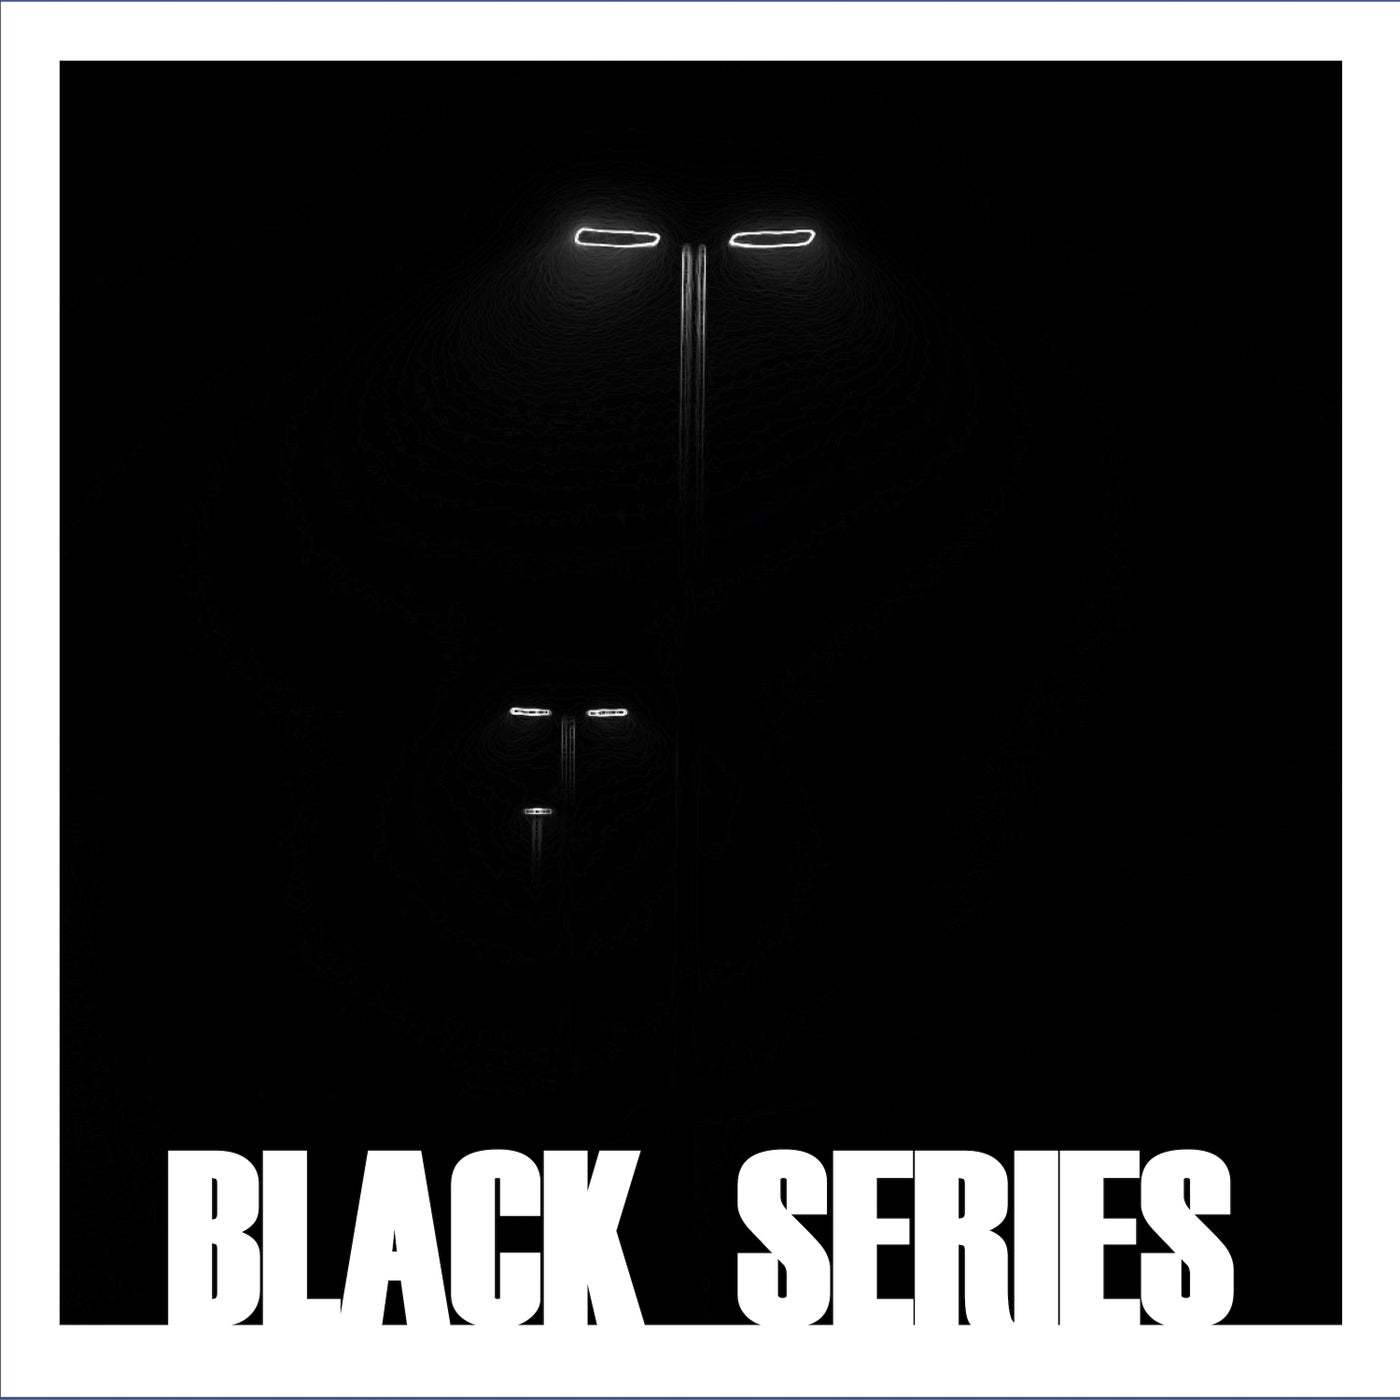 Black Series, Vol. 1